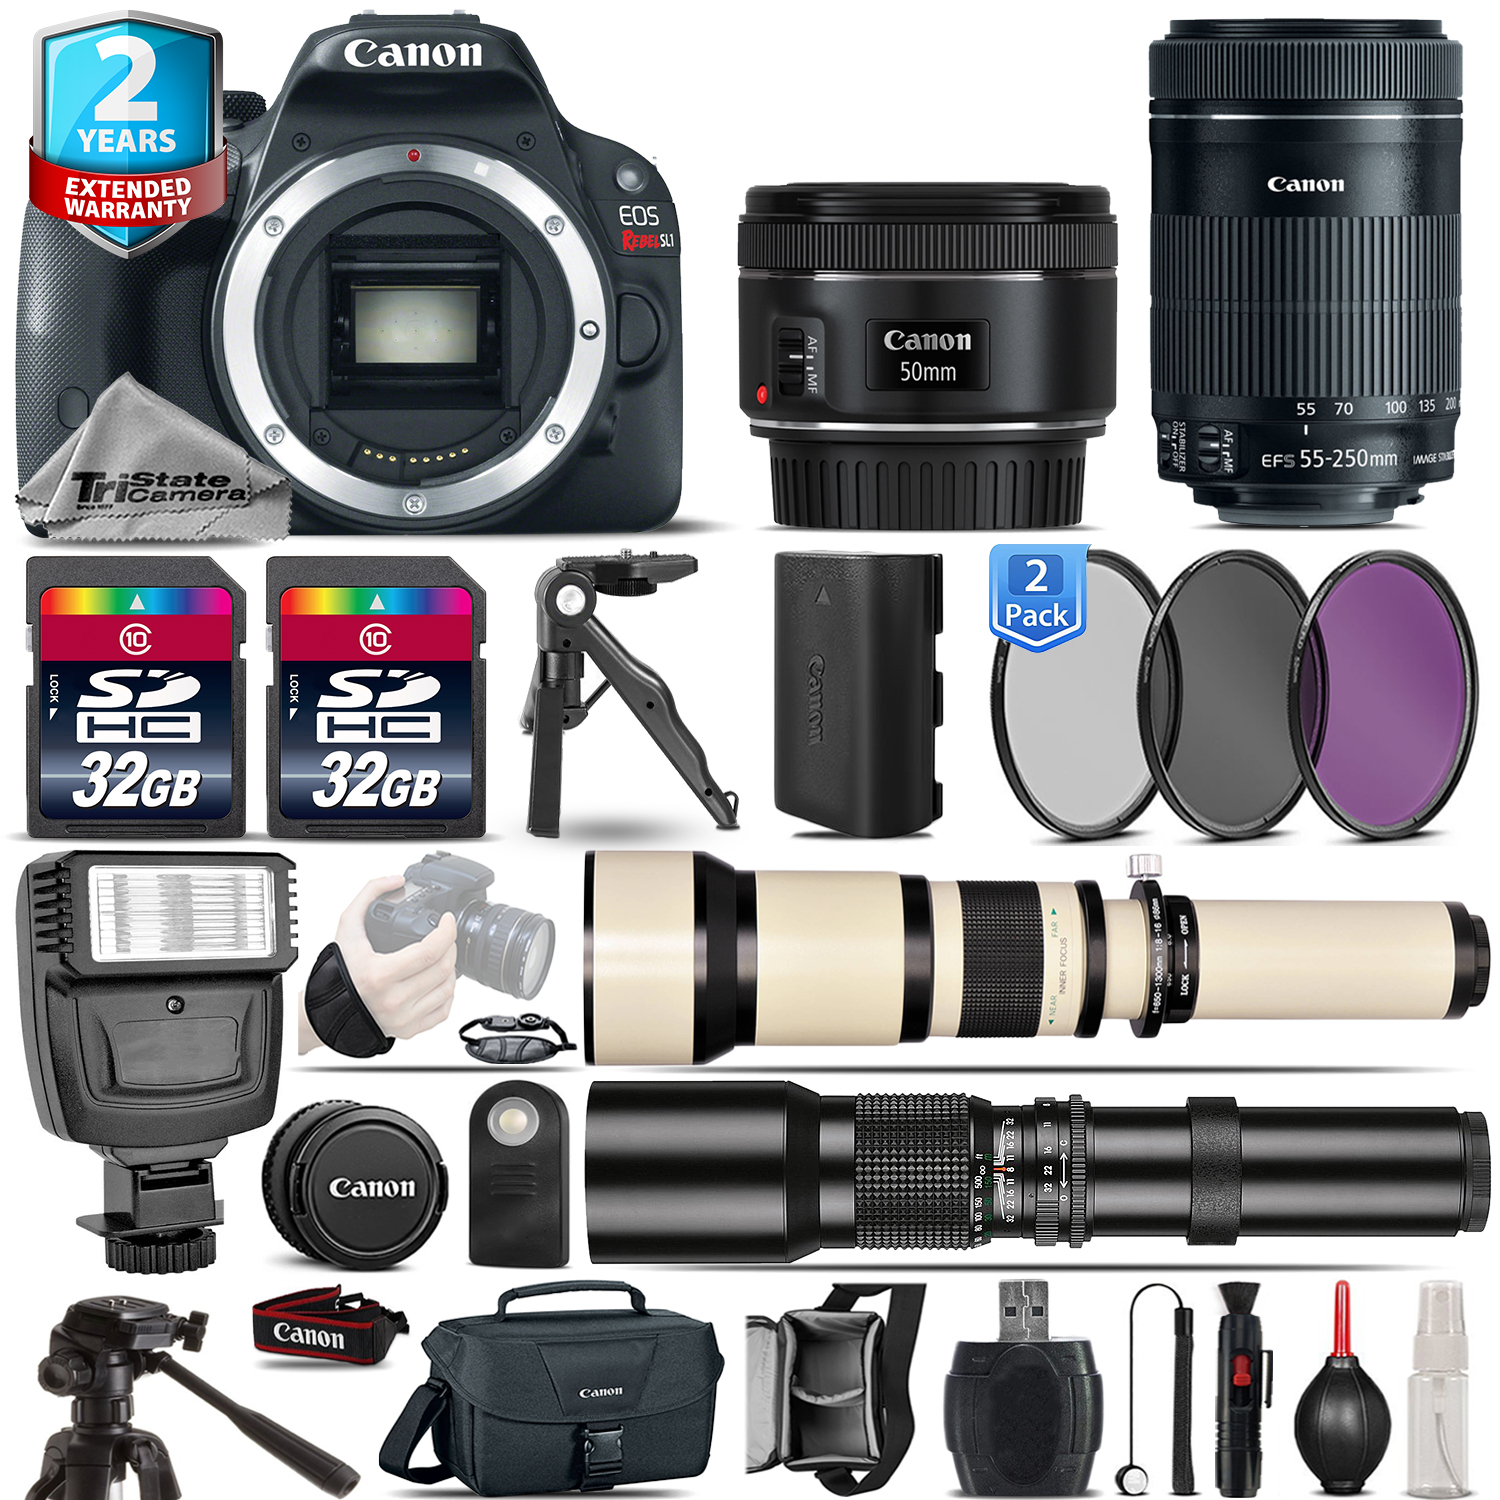 EOS Rebel SL1 Camera + 50mm 1.8 + 55-250mm IS STM + 2yr Warranty -64GB Kit *FREE SHIPPING*